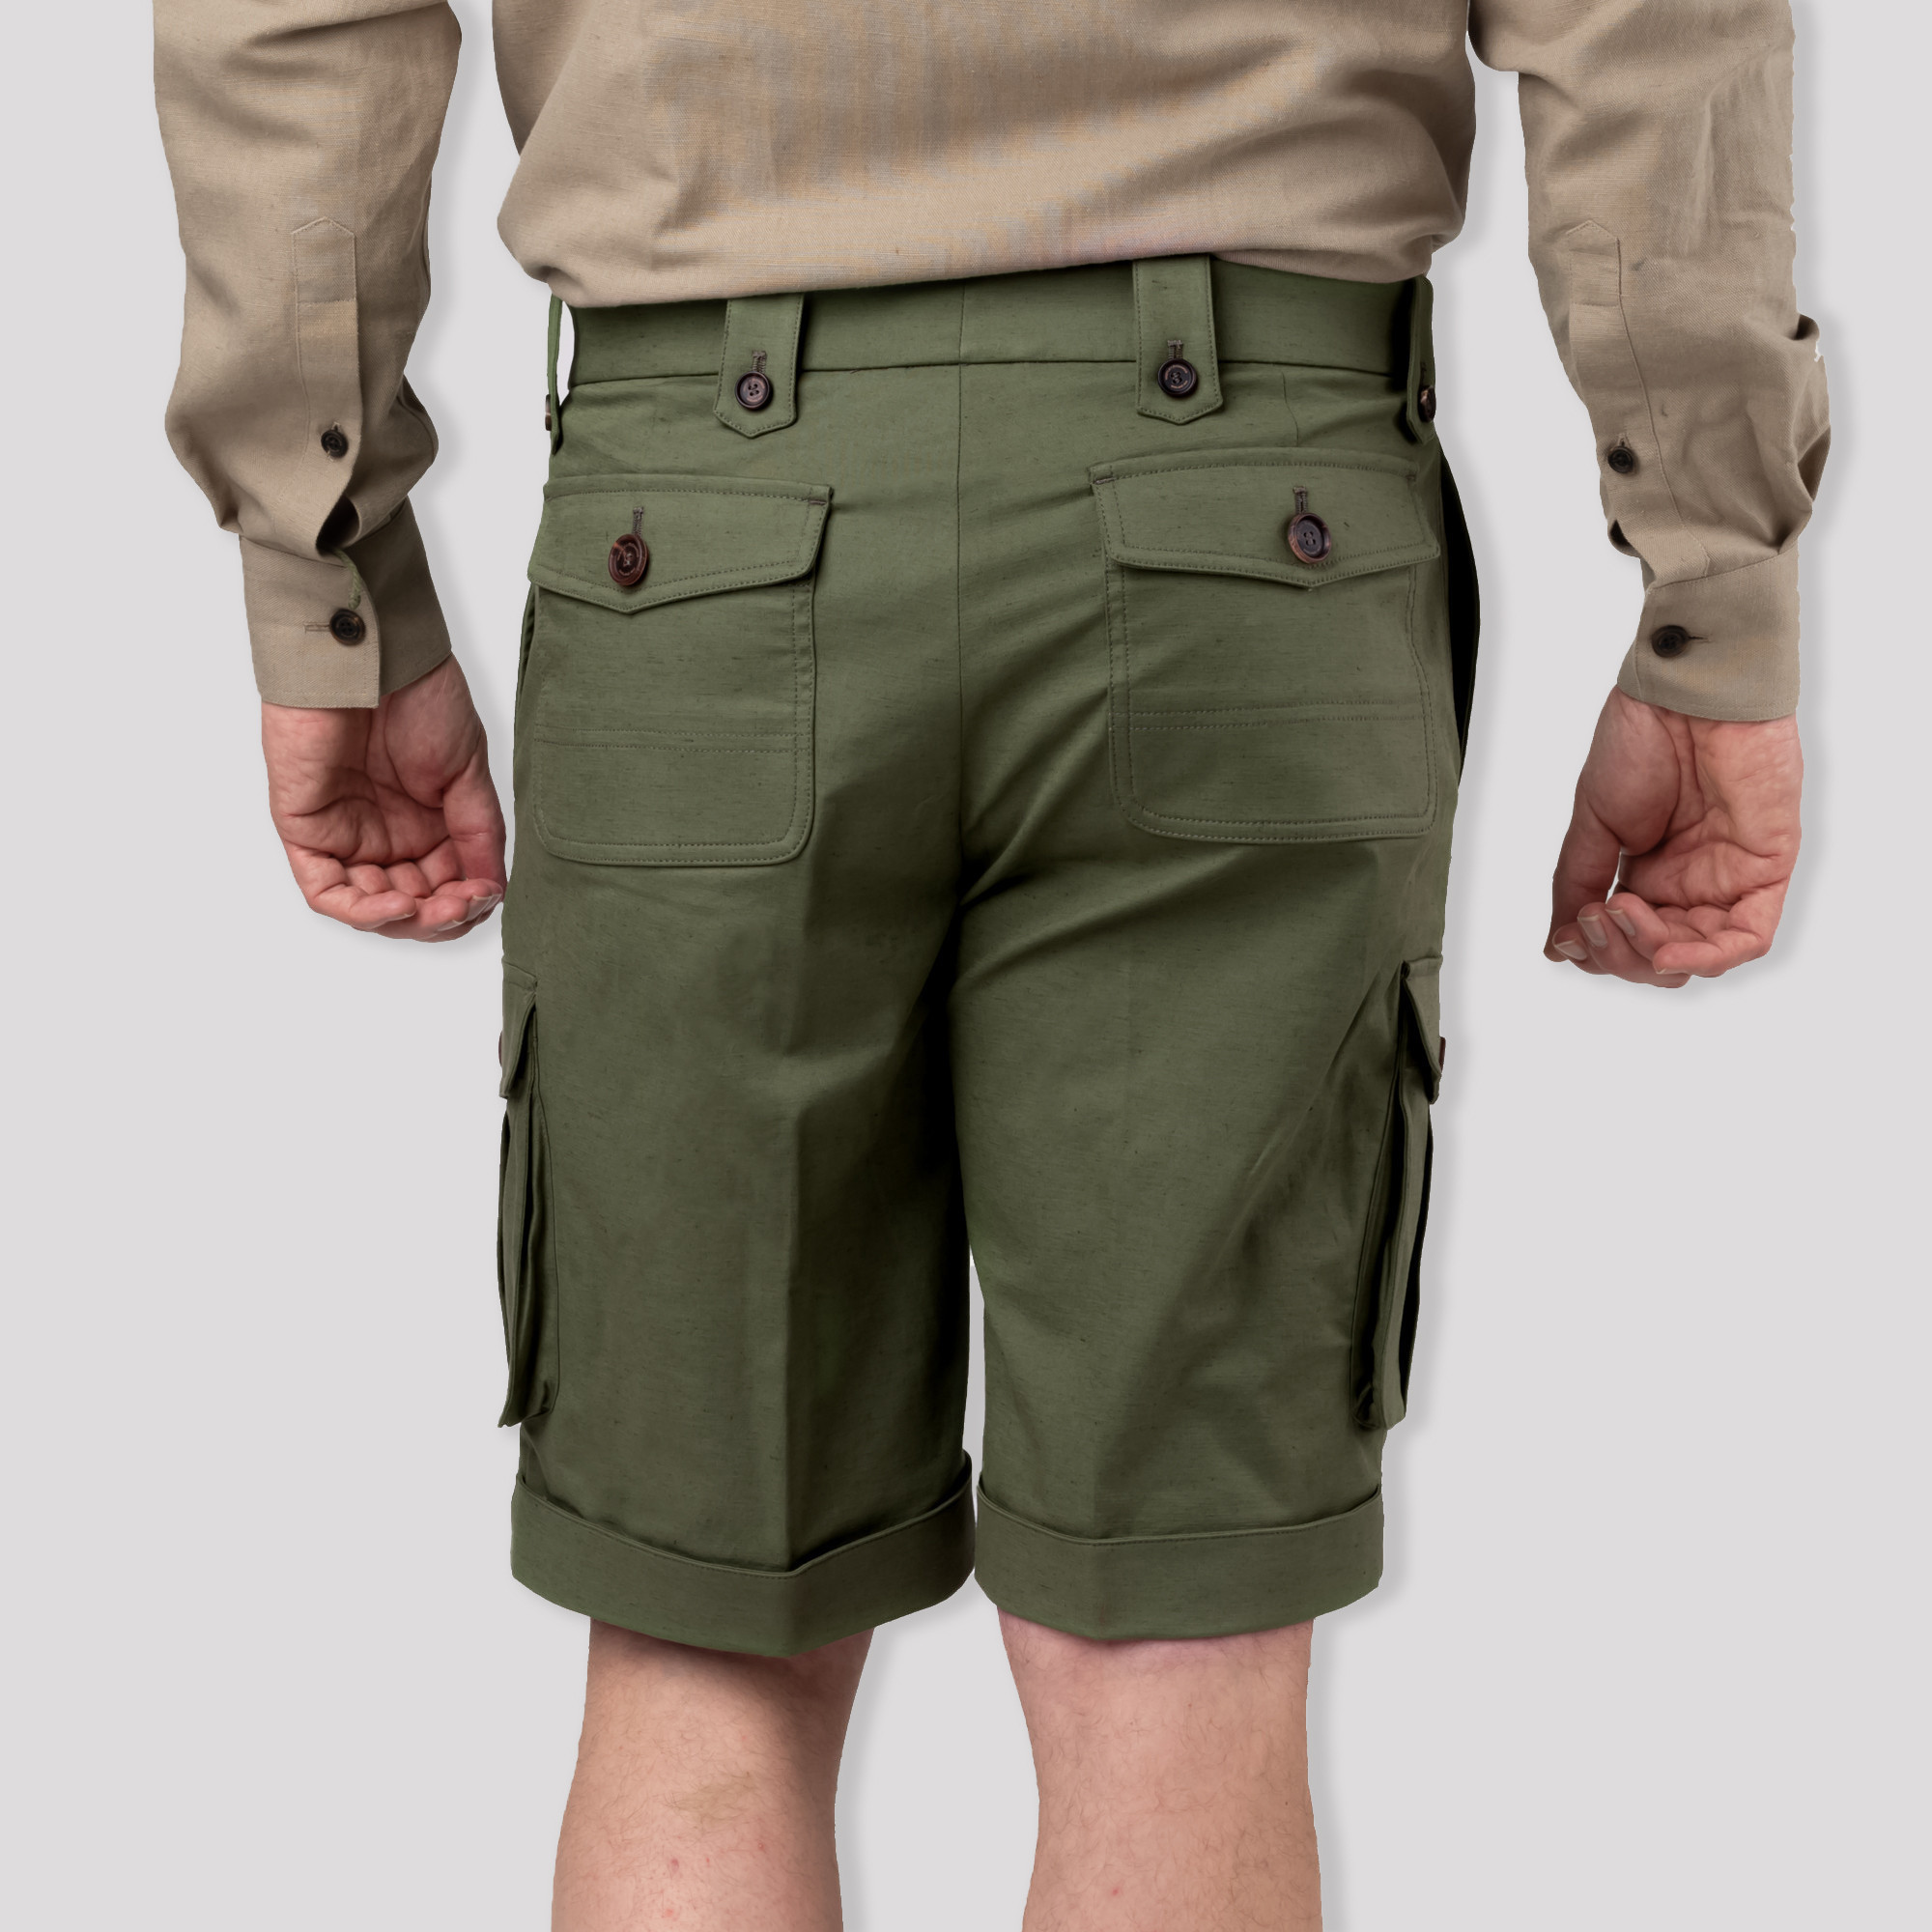 Westley Richards Safari Shorts in Lovat